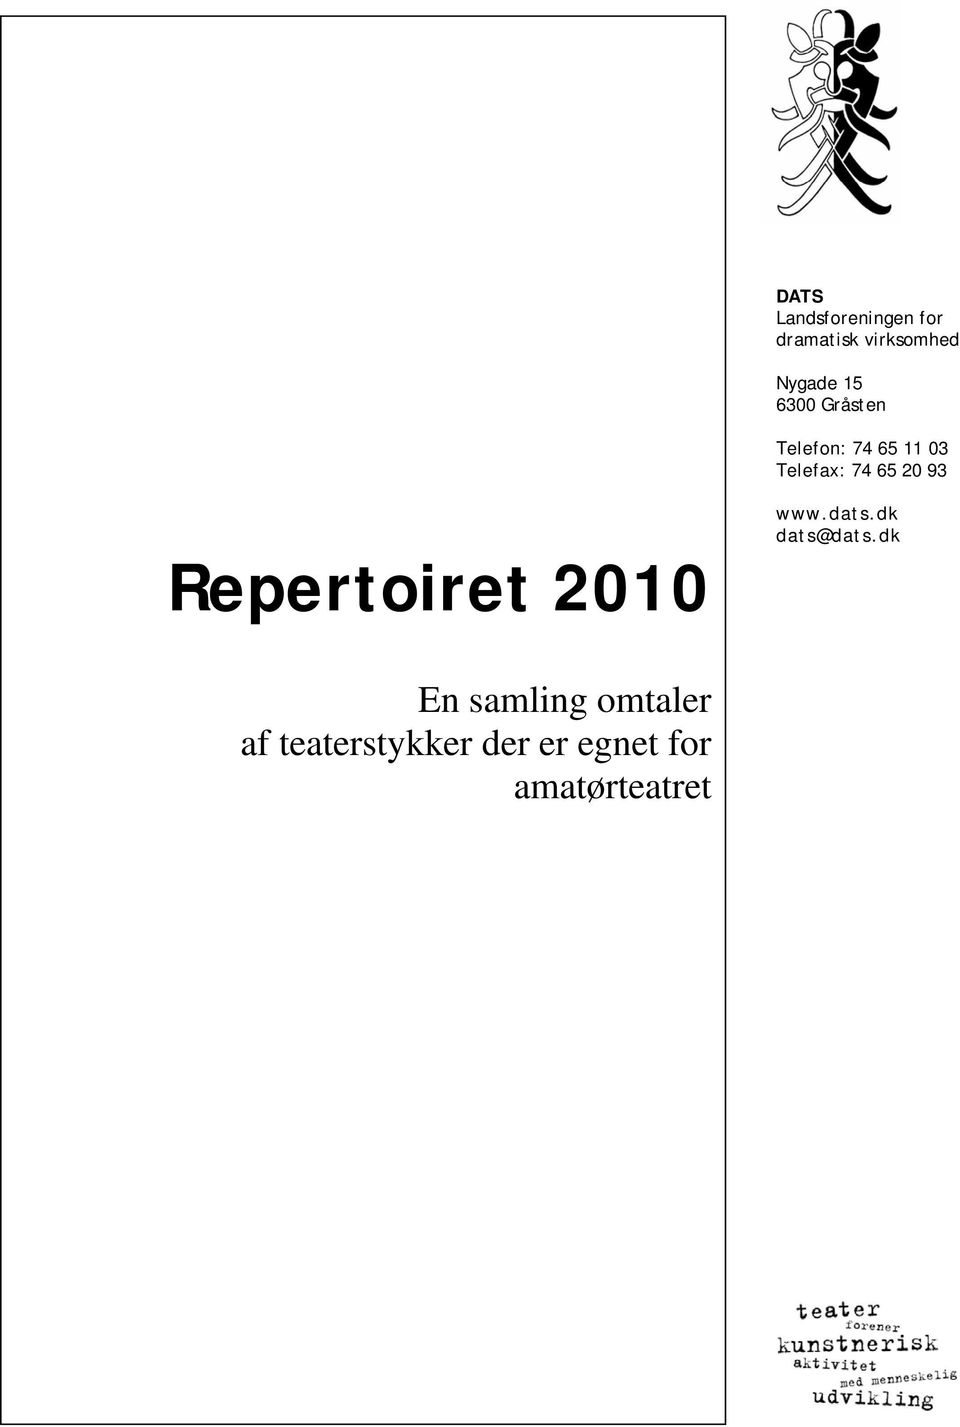 93 Repertoiret 2010 www.dats.dk dats@dats.